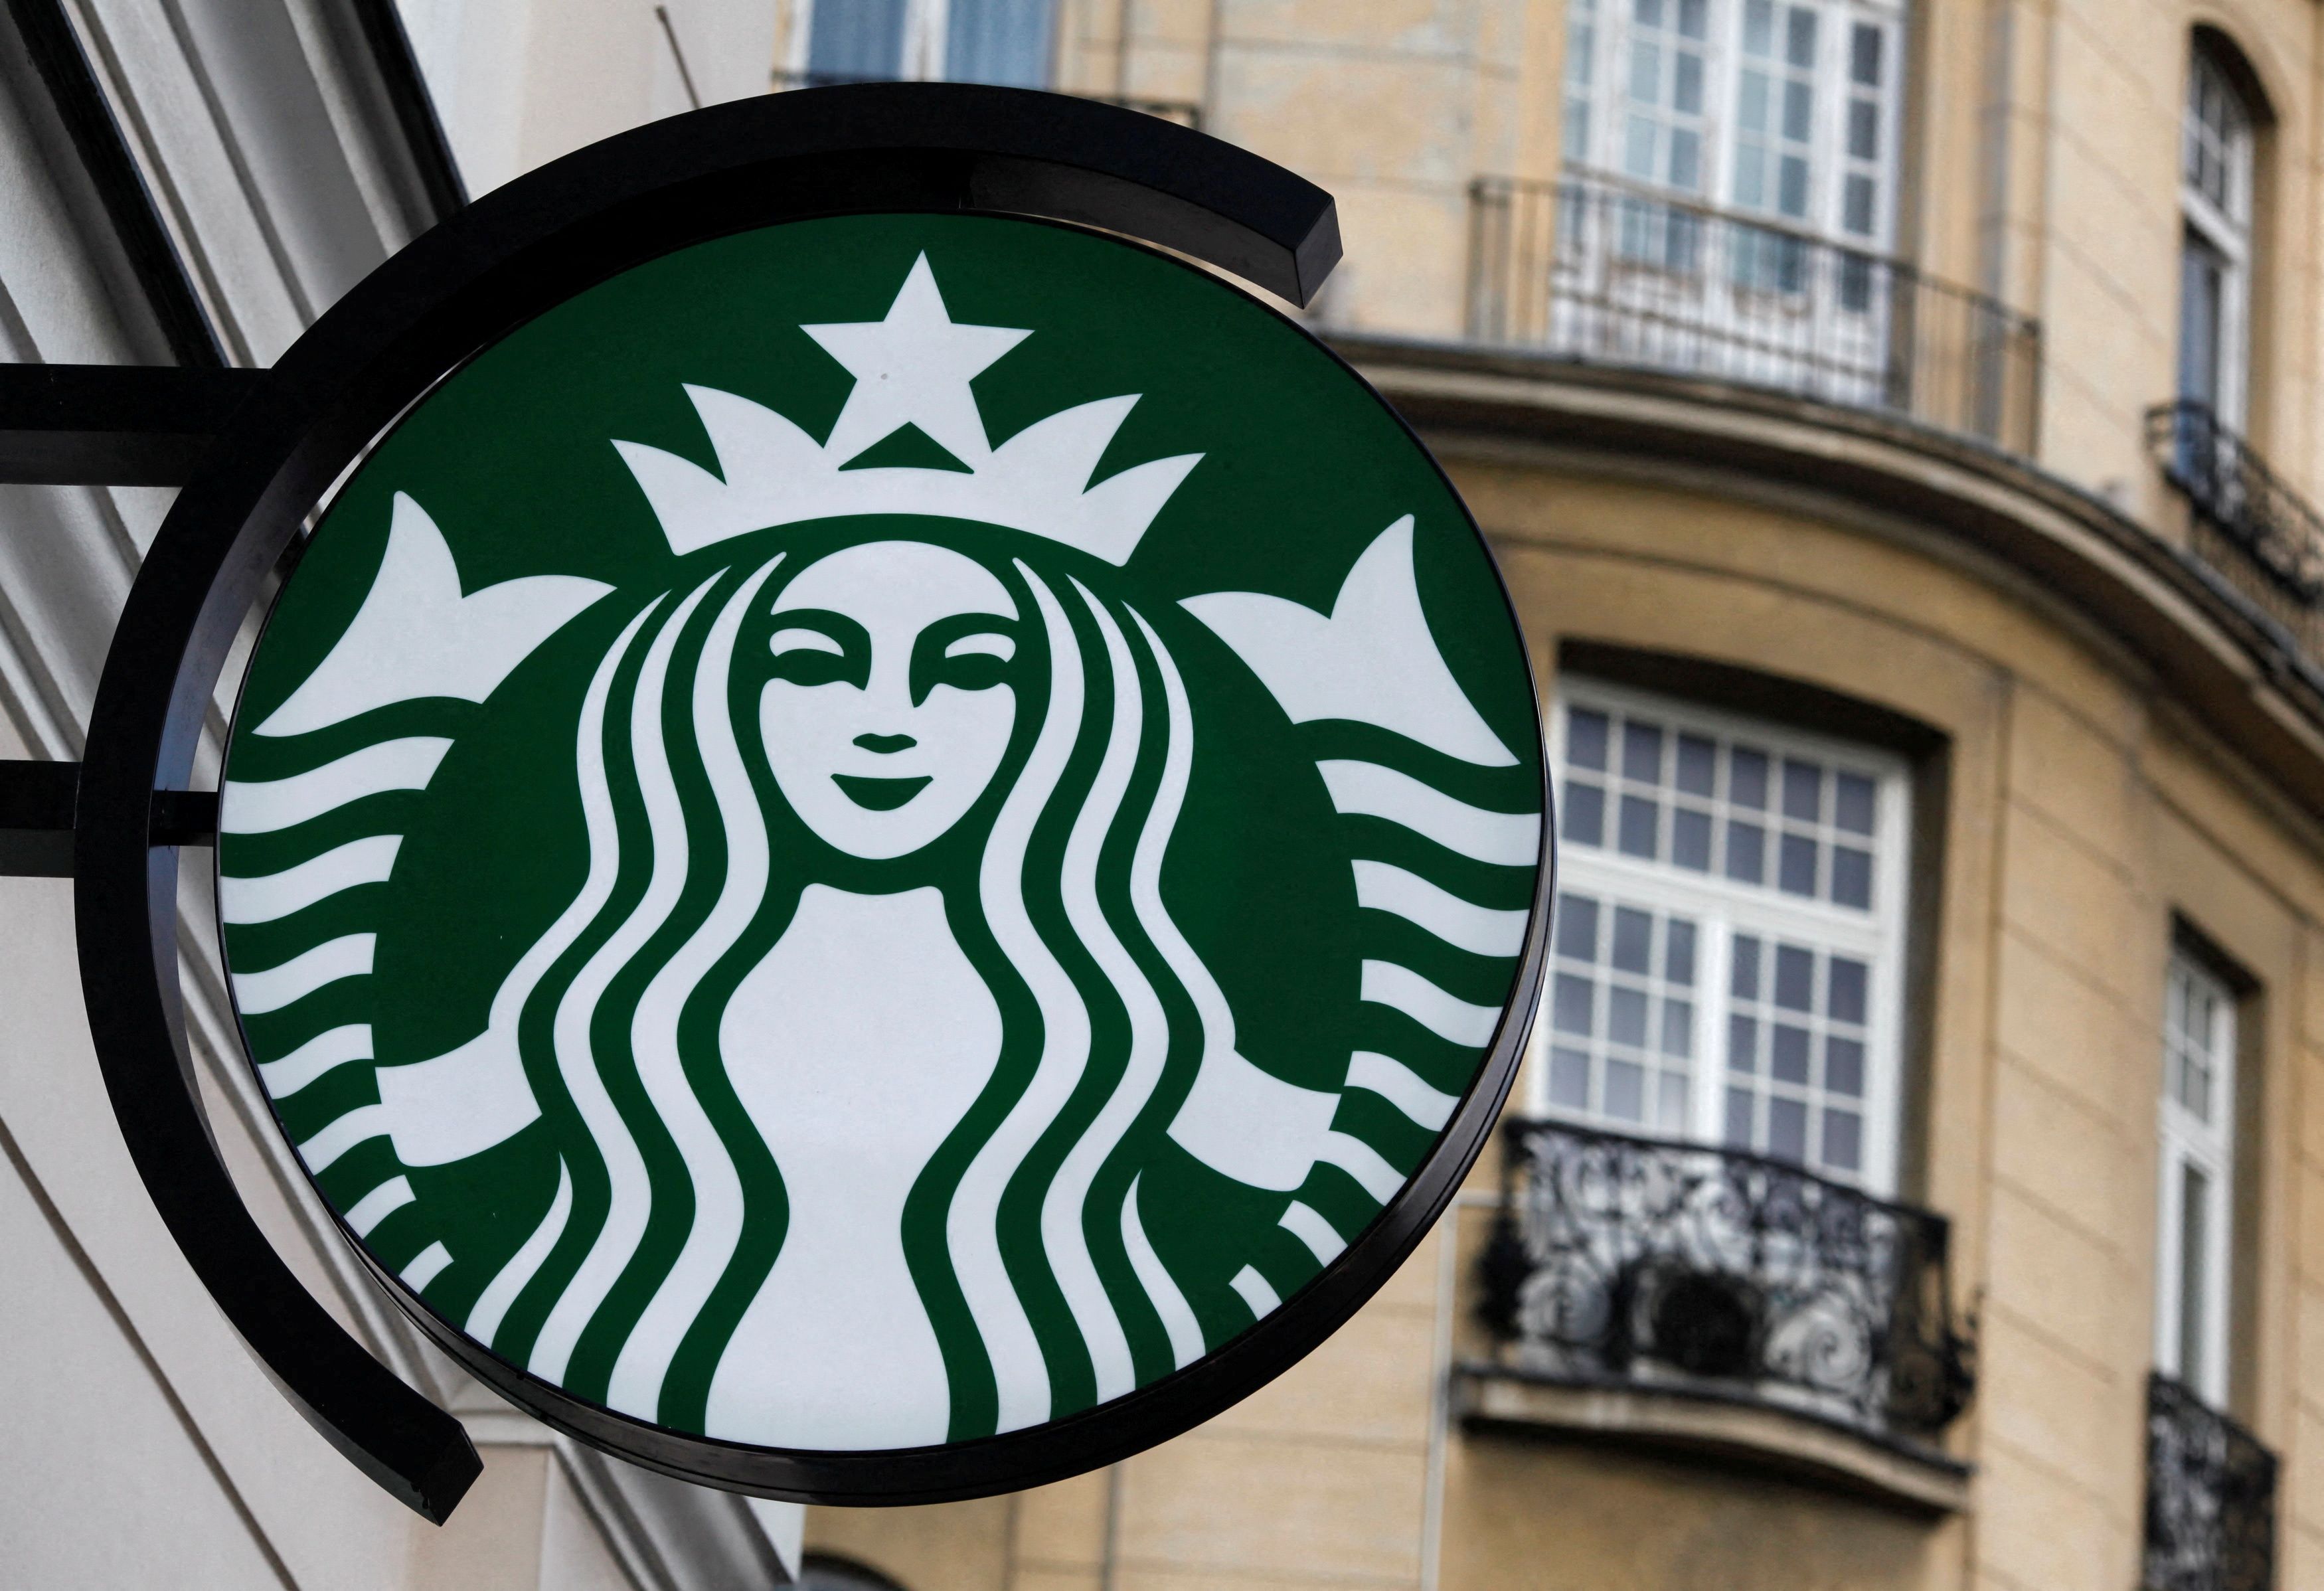 The Starbucks logo is seen outside the new Starbucks cafe in Warsaw